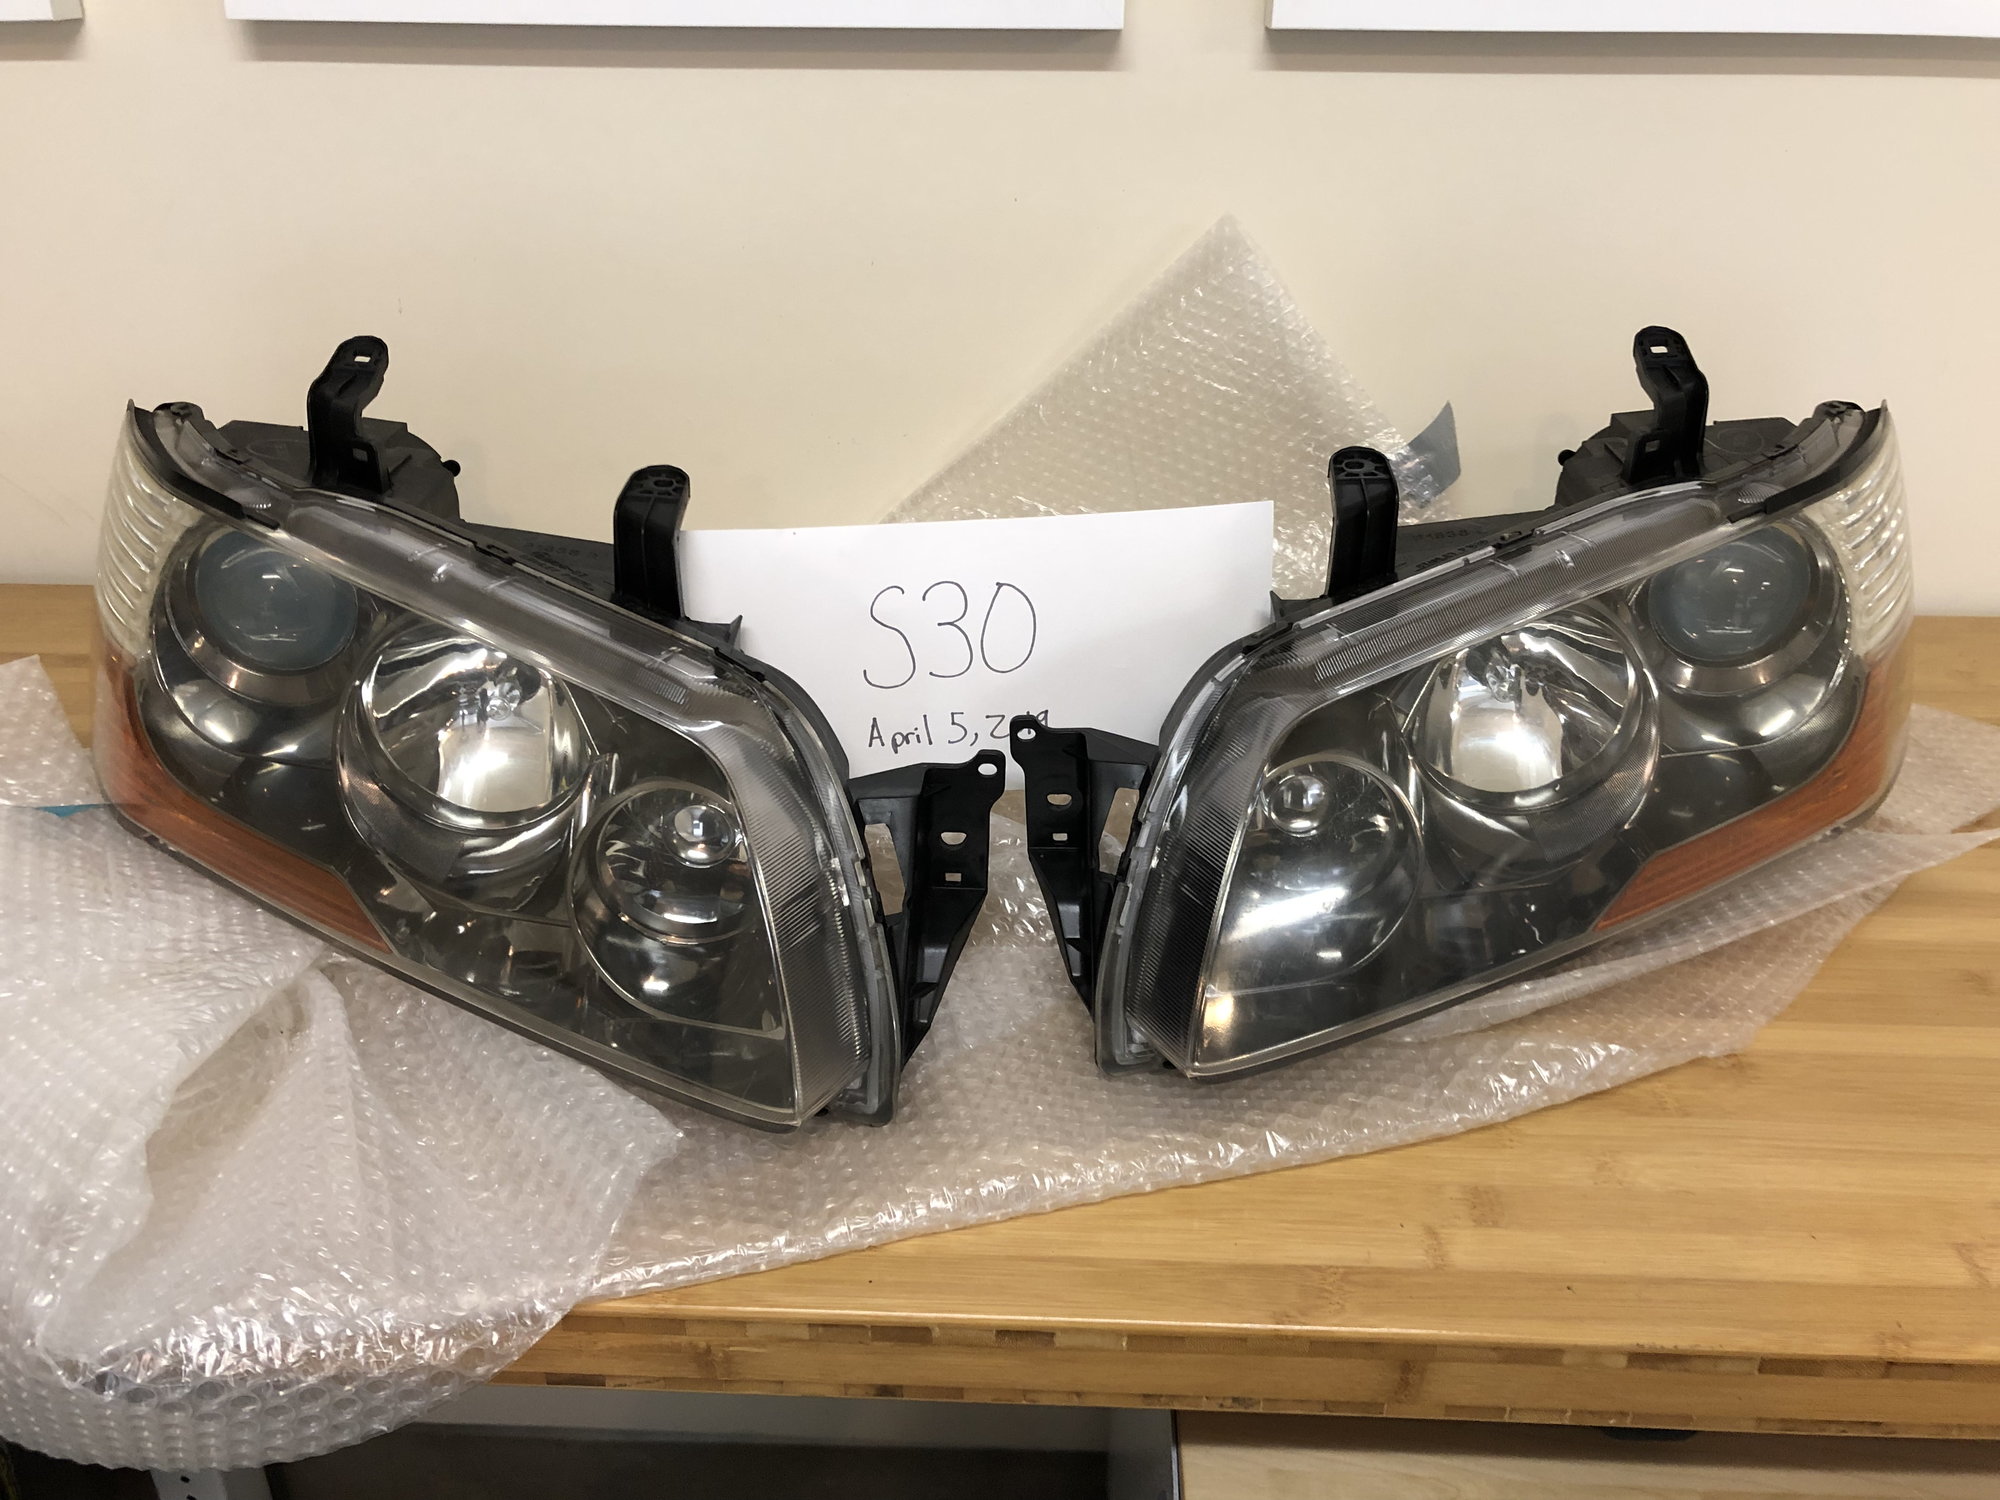 Lights - IX JDM HID headlights, very clean - Used - 2006 to 2007 Mitsubishi Lancer Evolution - San Jose, CA 95014, United States